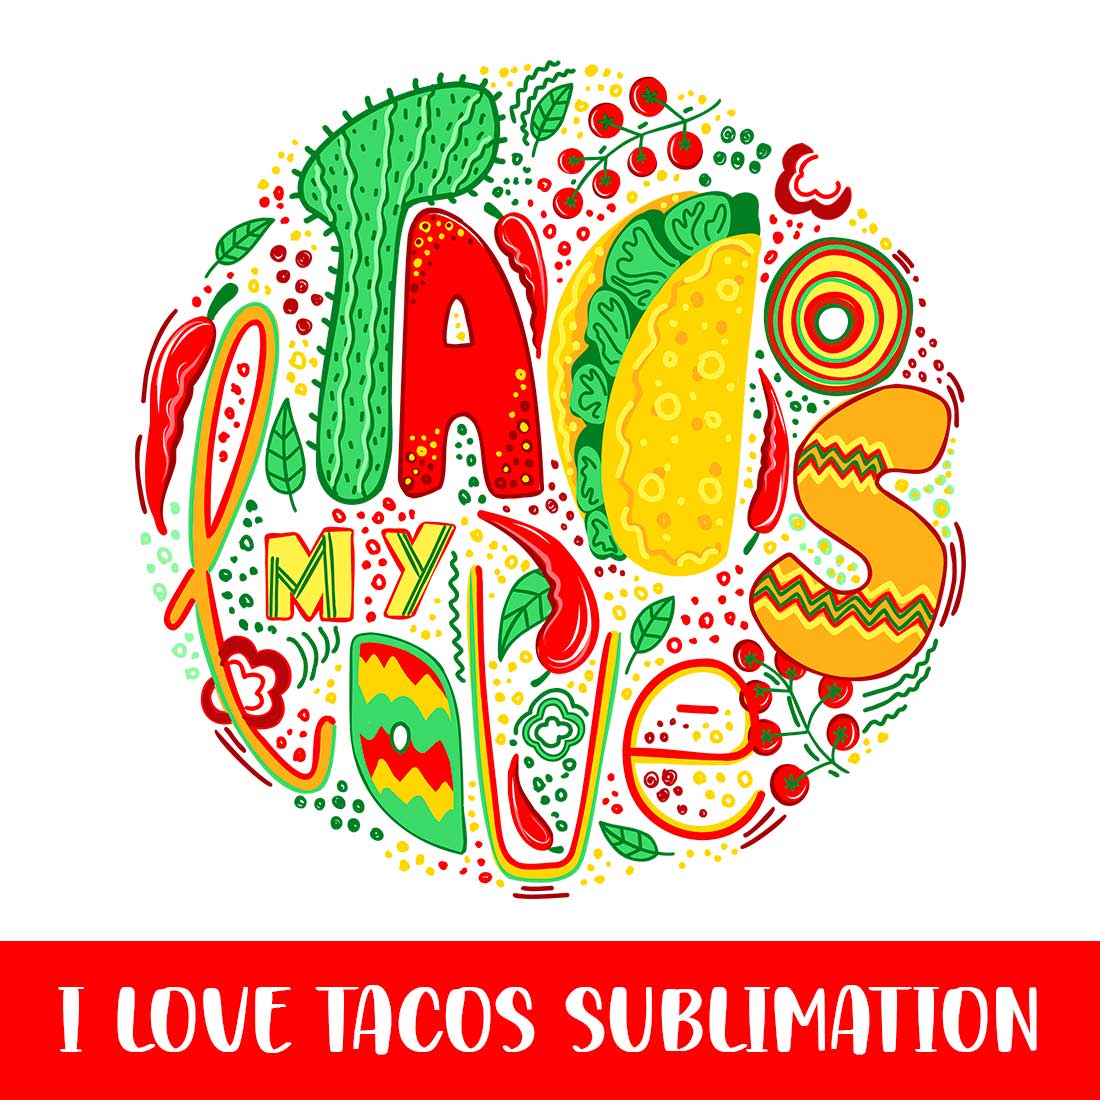 I Love Tacos PNG Sublimation/Jpeg/SVG/EPS main cover image.